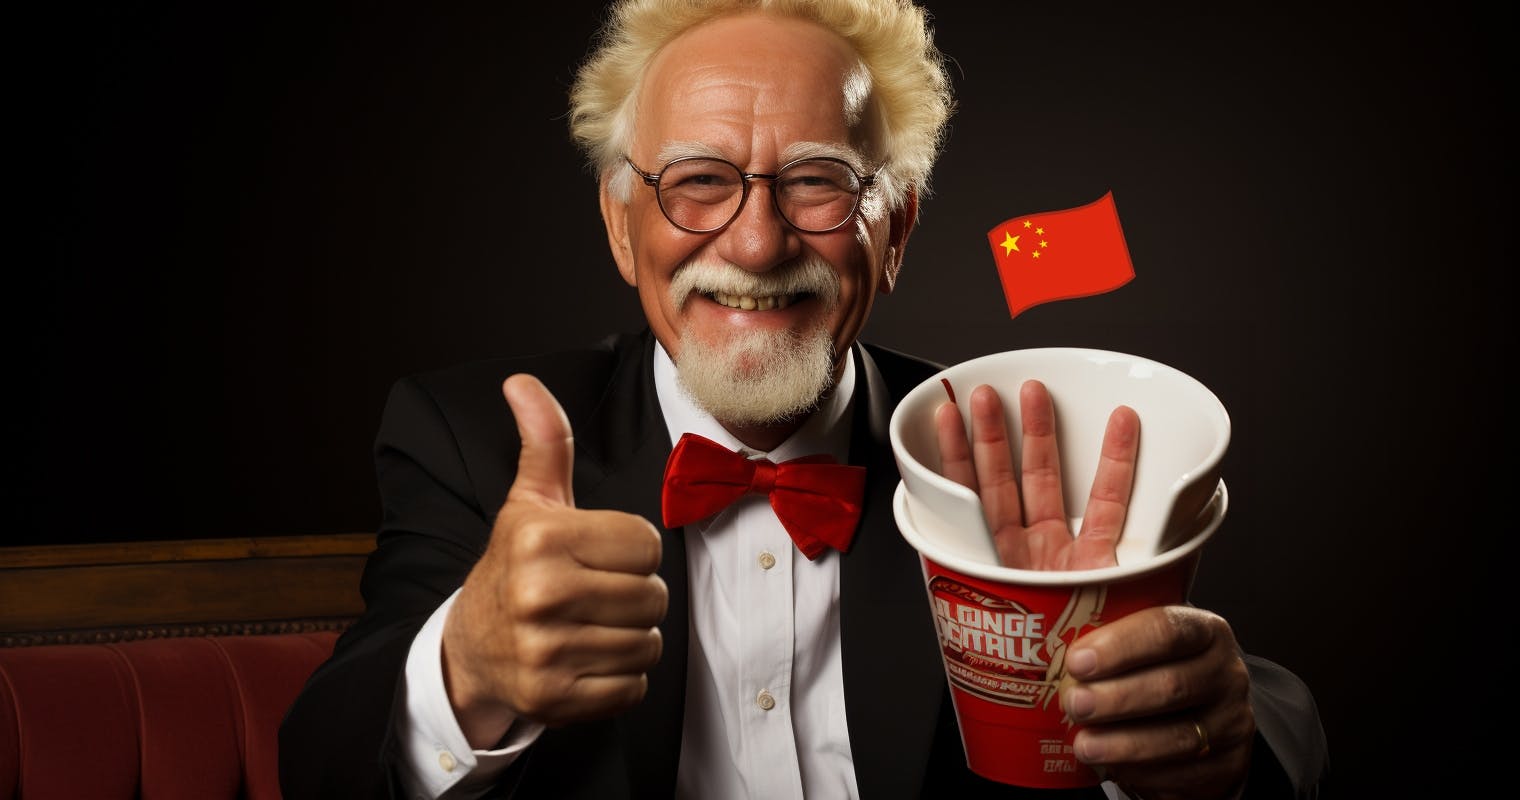 KFC's Cannibalistic Slogan: Finger Licking Good